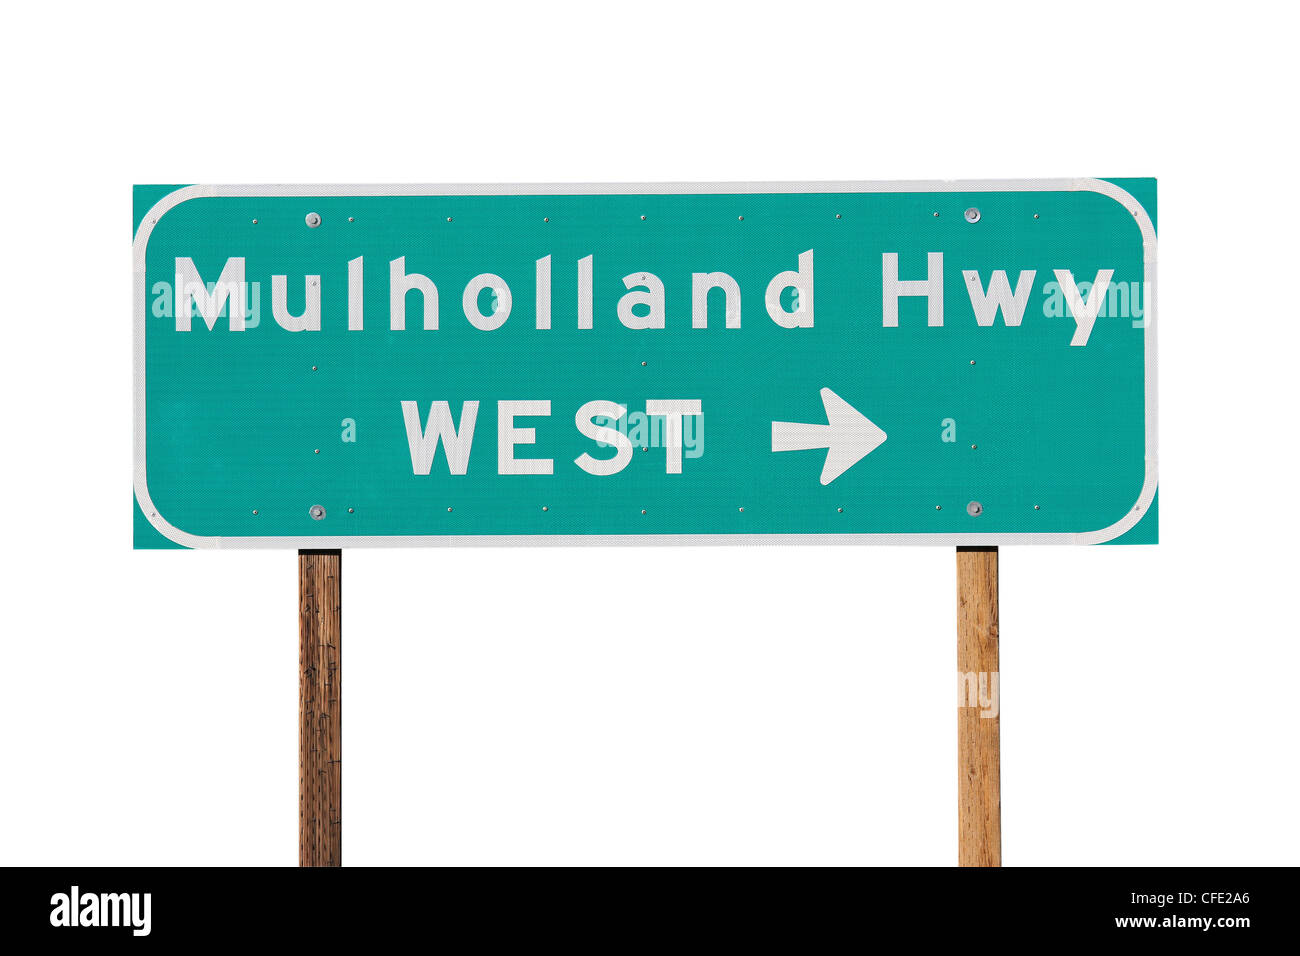 Mulholland Highway sign, près de Los Angeles en Californie. Banque D'Images